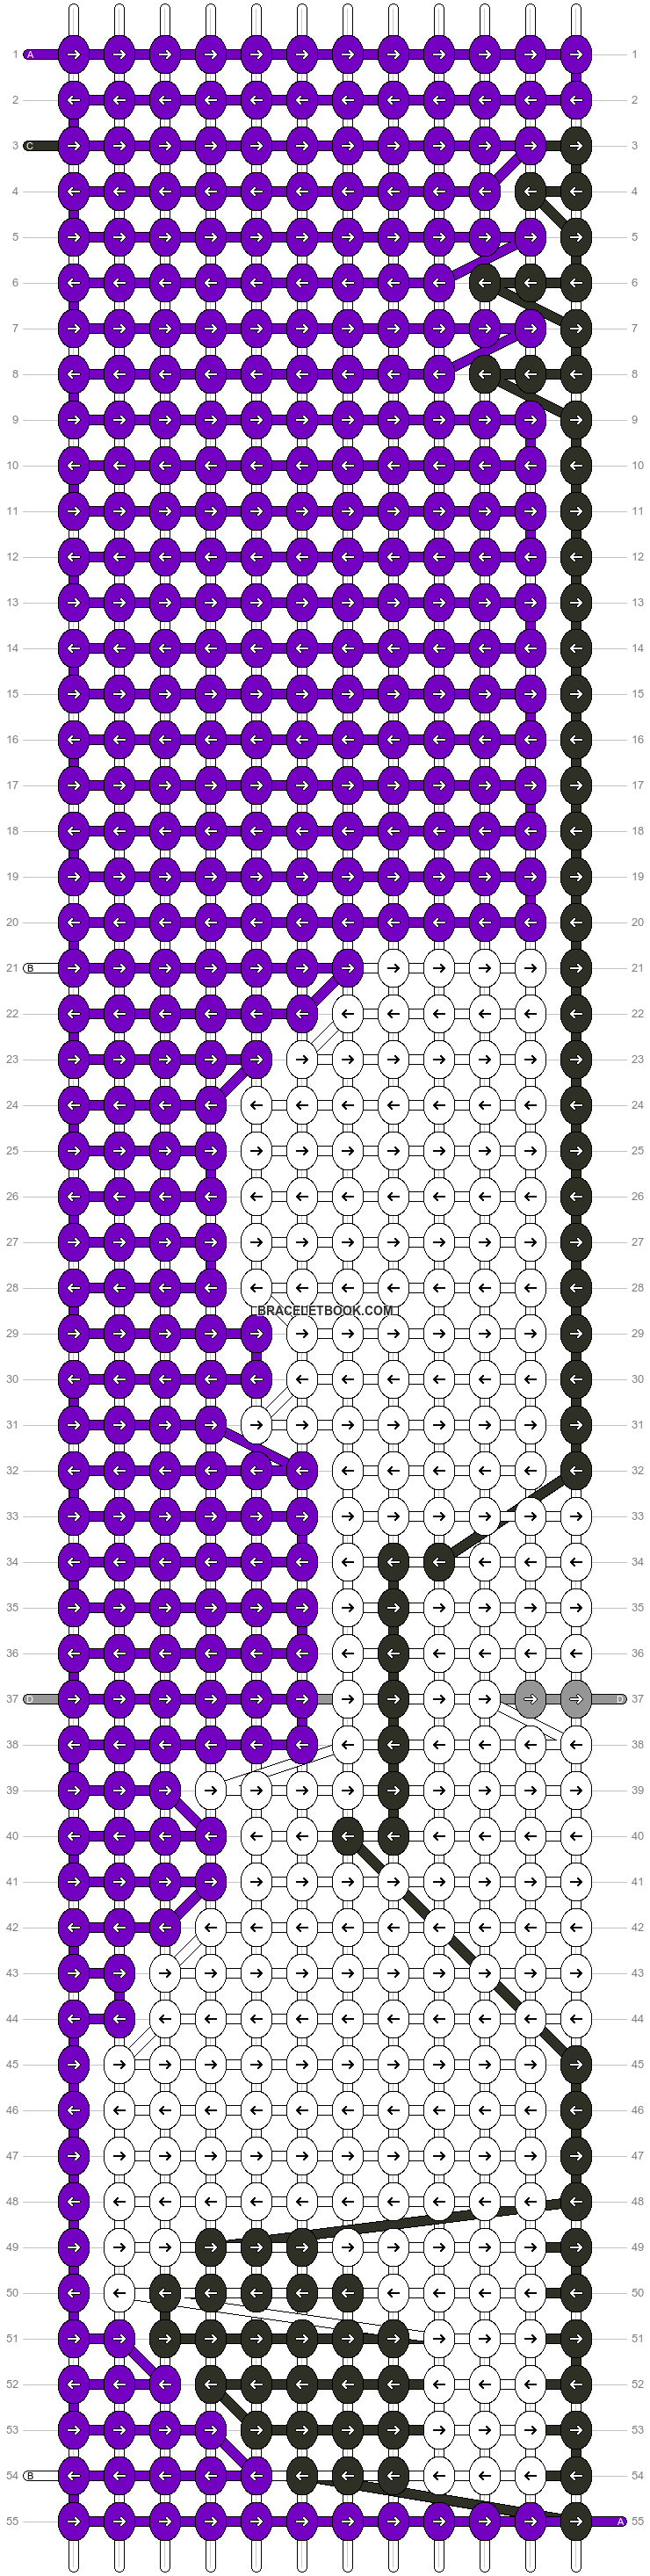 Alpha pattern #51132 variation #119555 pattern